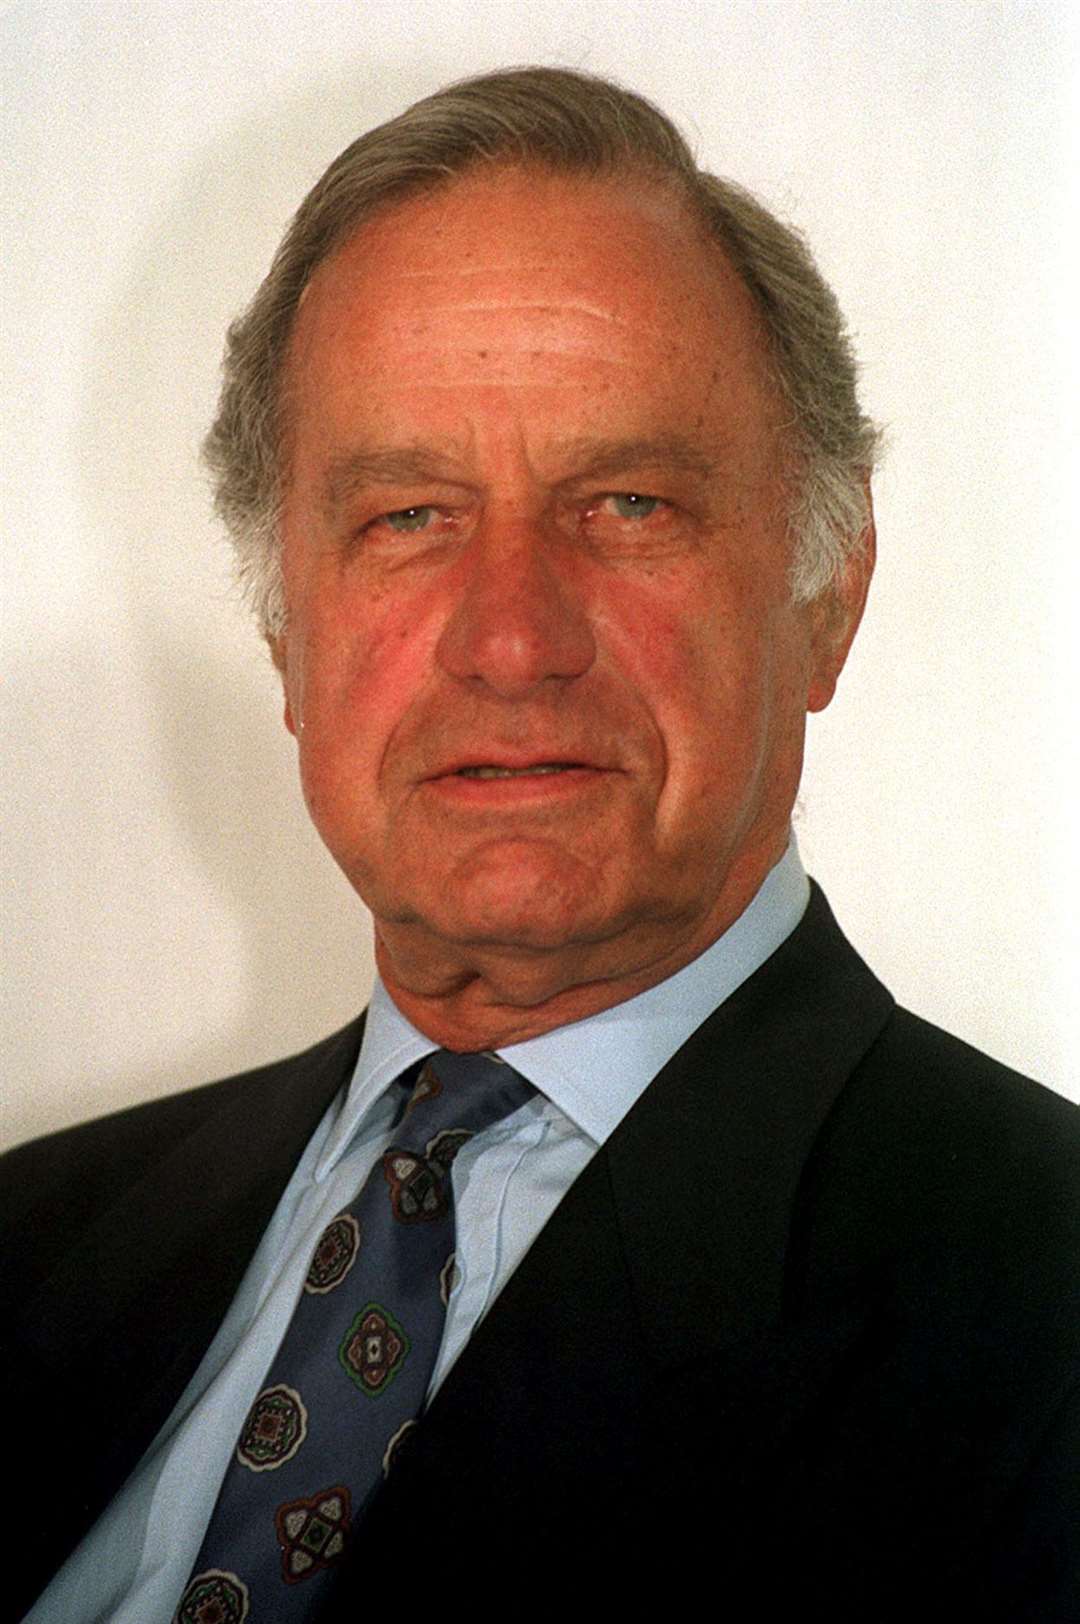 Geoffrey Palmer has died aged 93 (Sean Dempsey/PA)